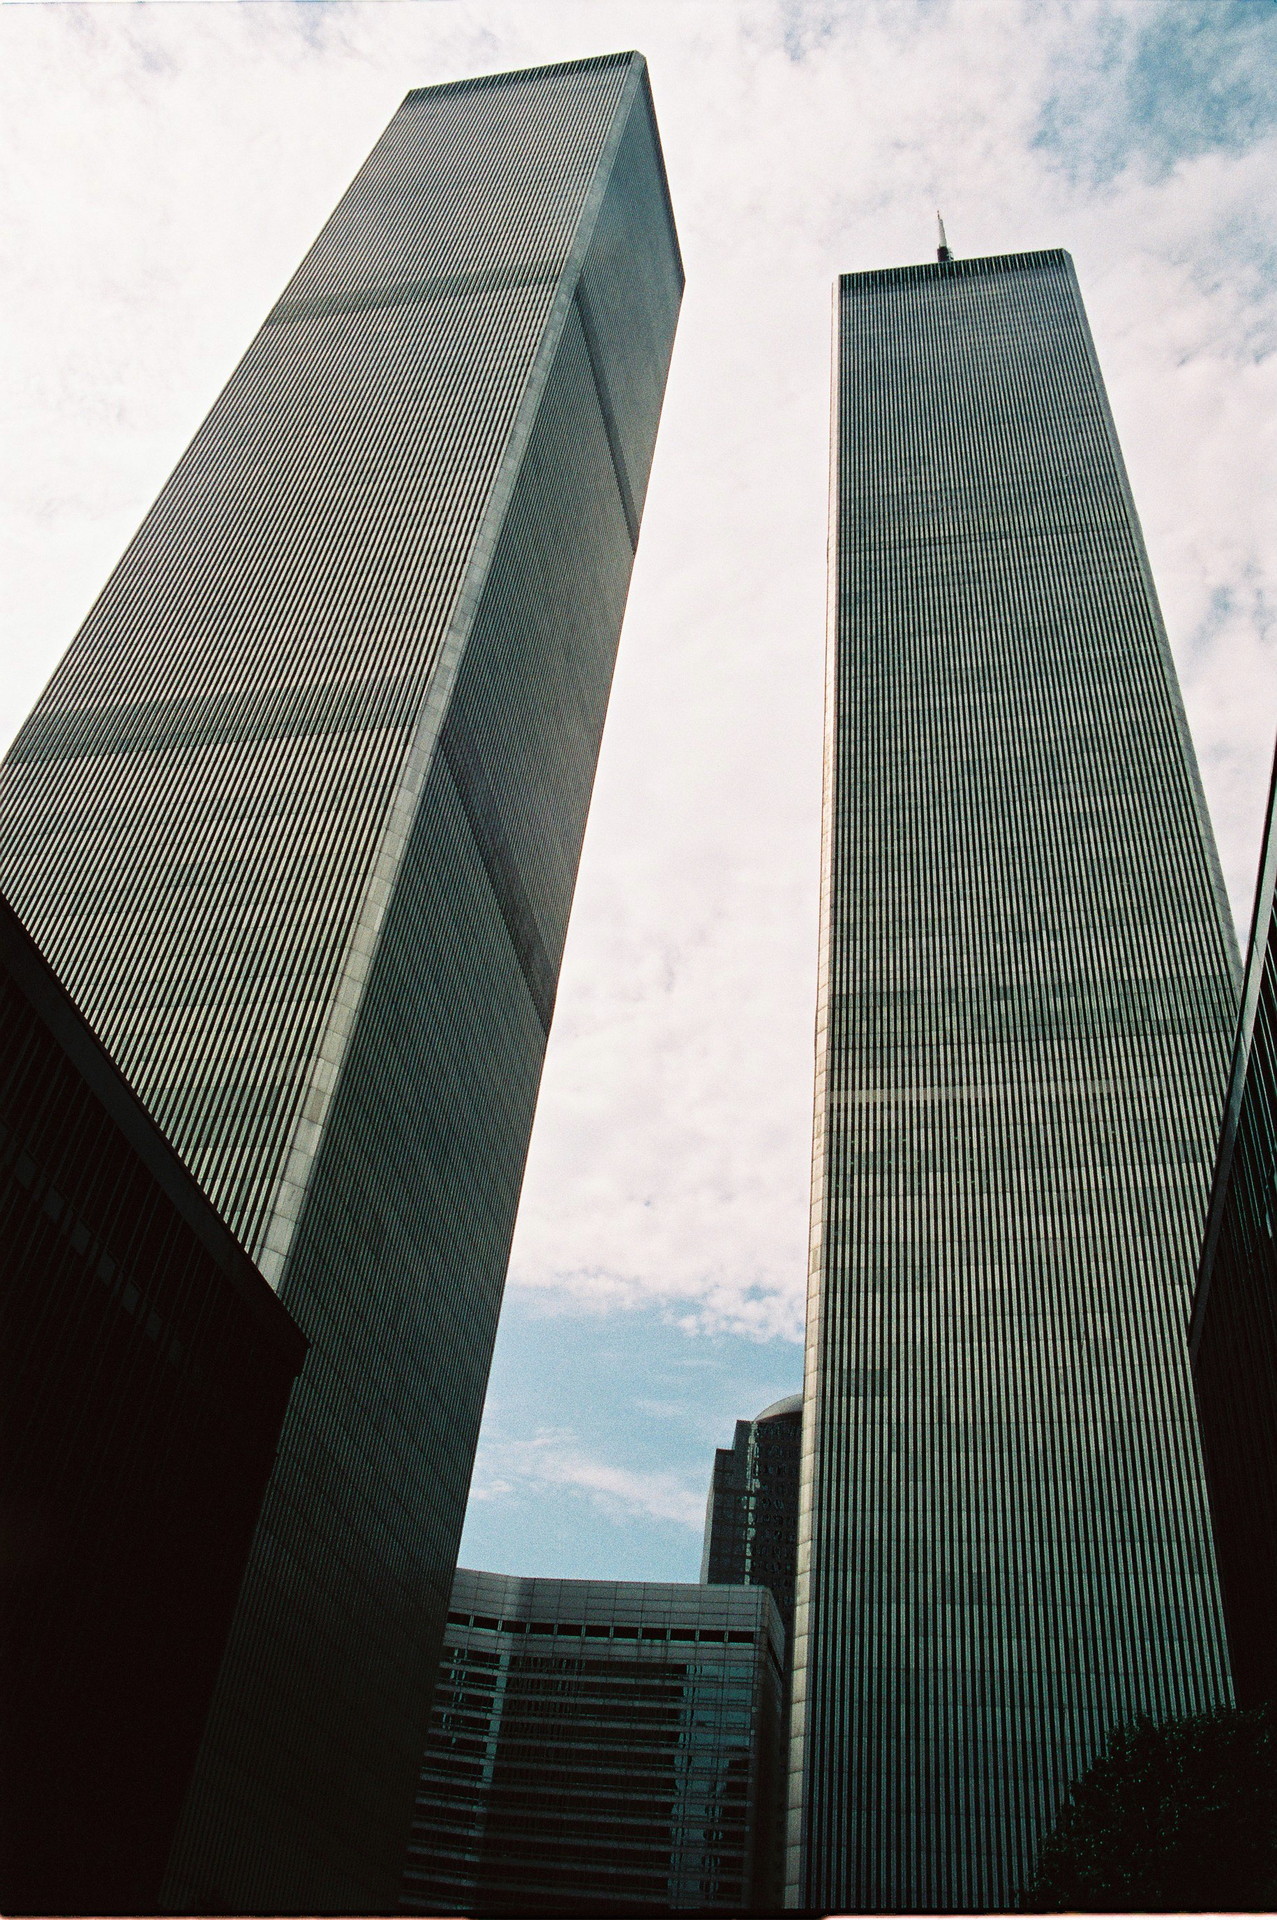  TWIN TOWERS 1992, NEW YORK 